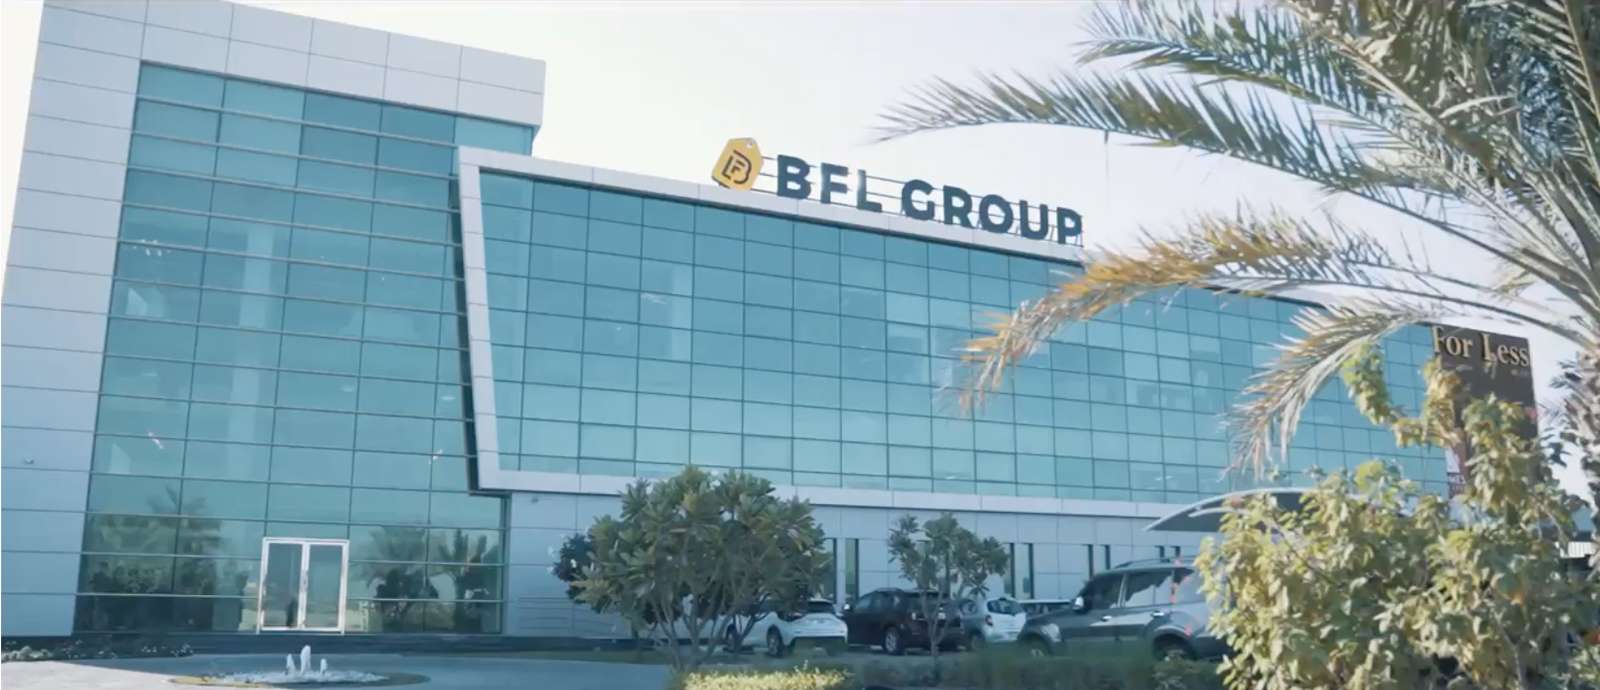 BFL Group Headquarters in Jafza